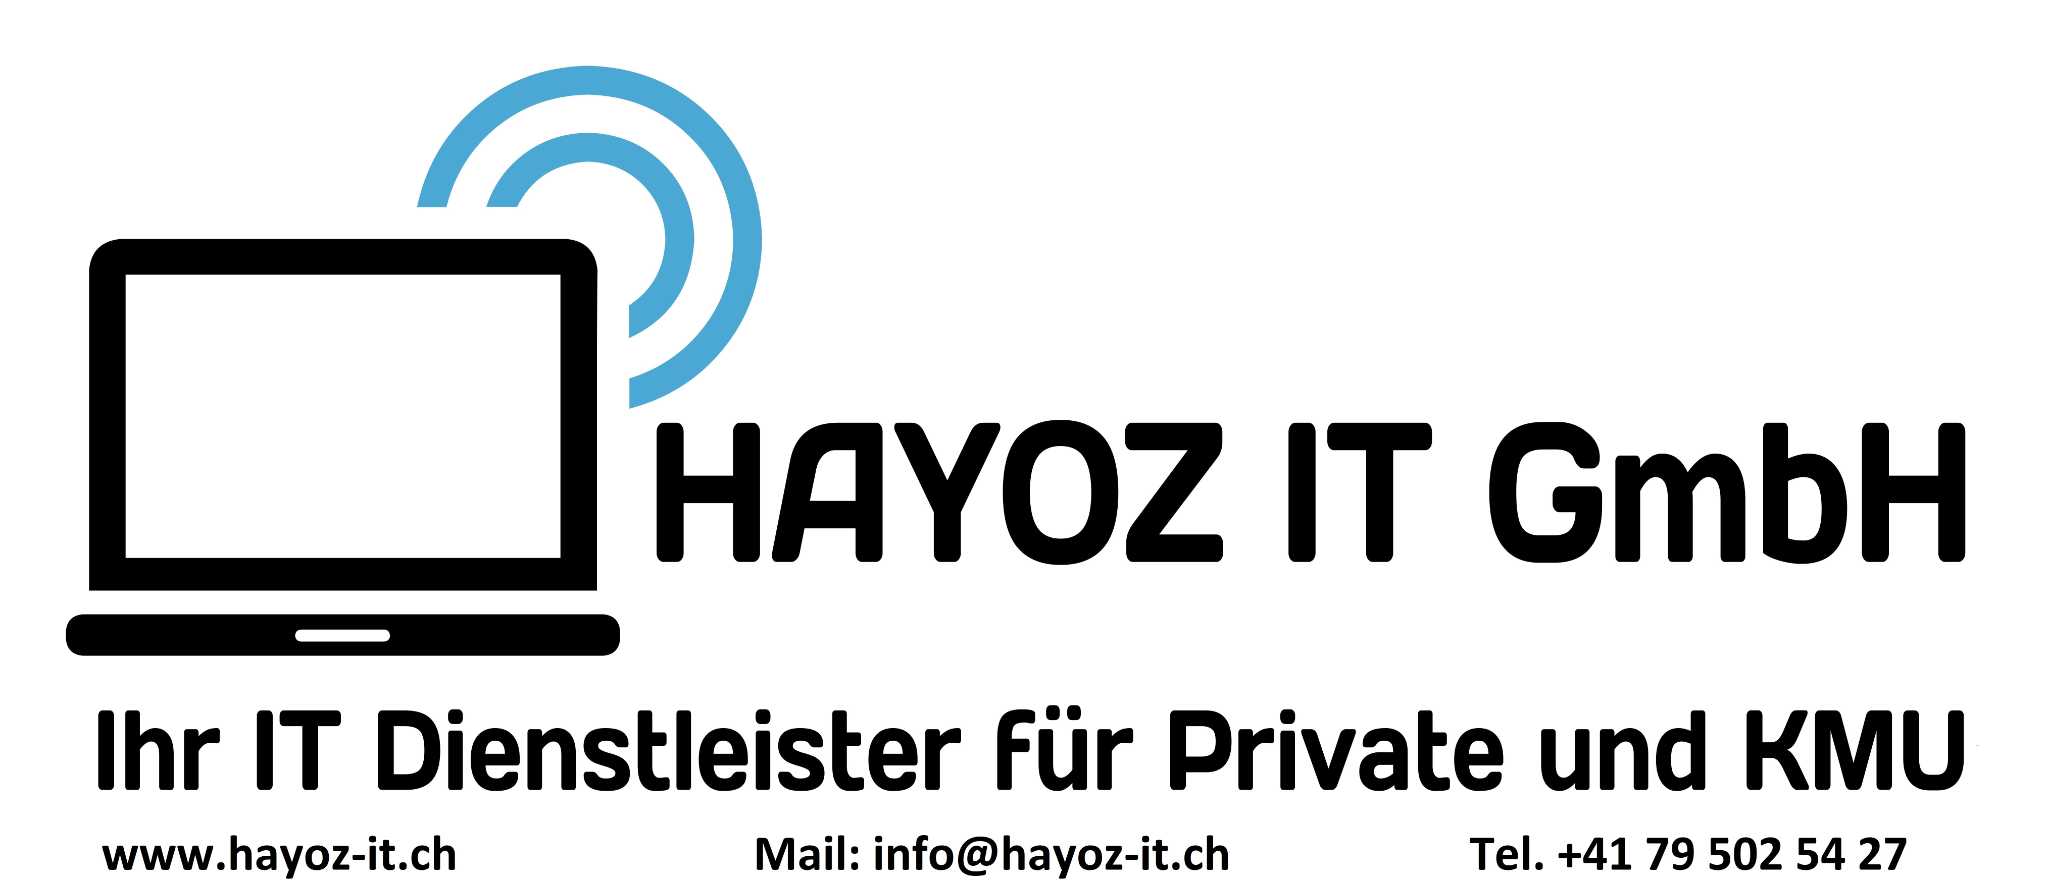 Hayoz IT GmbH